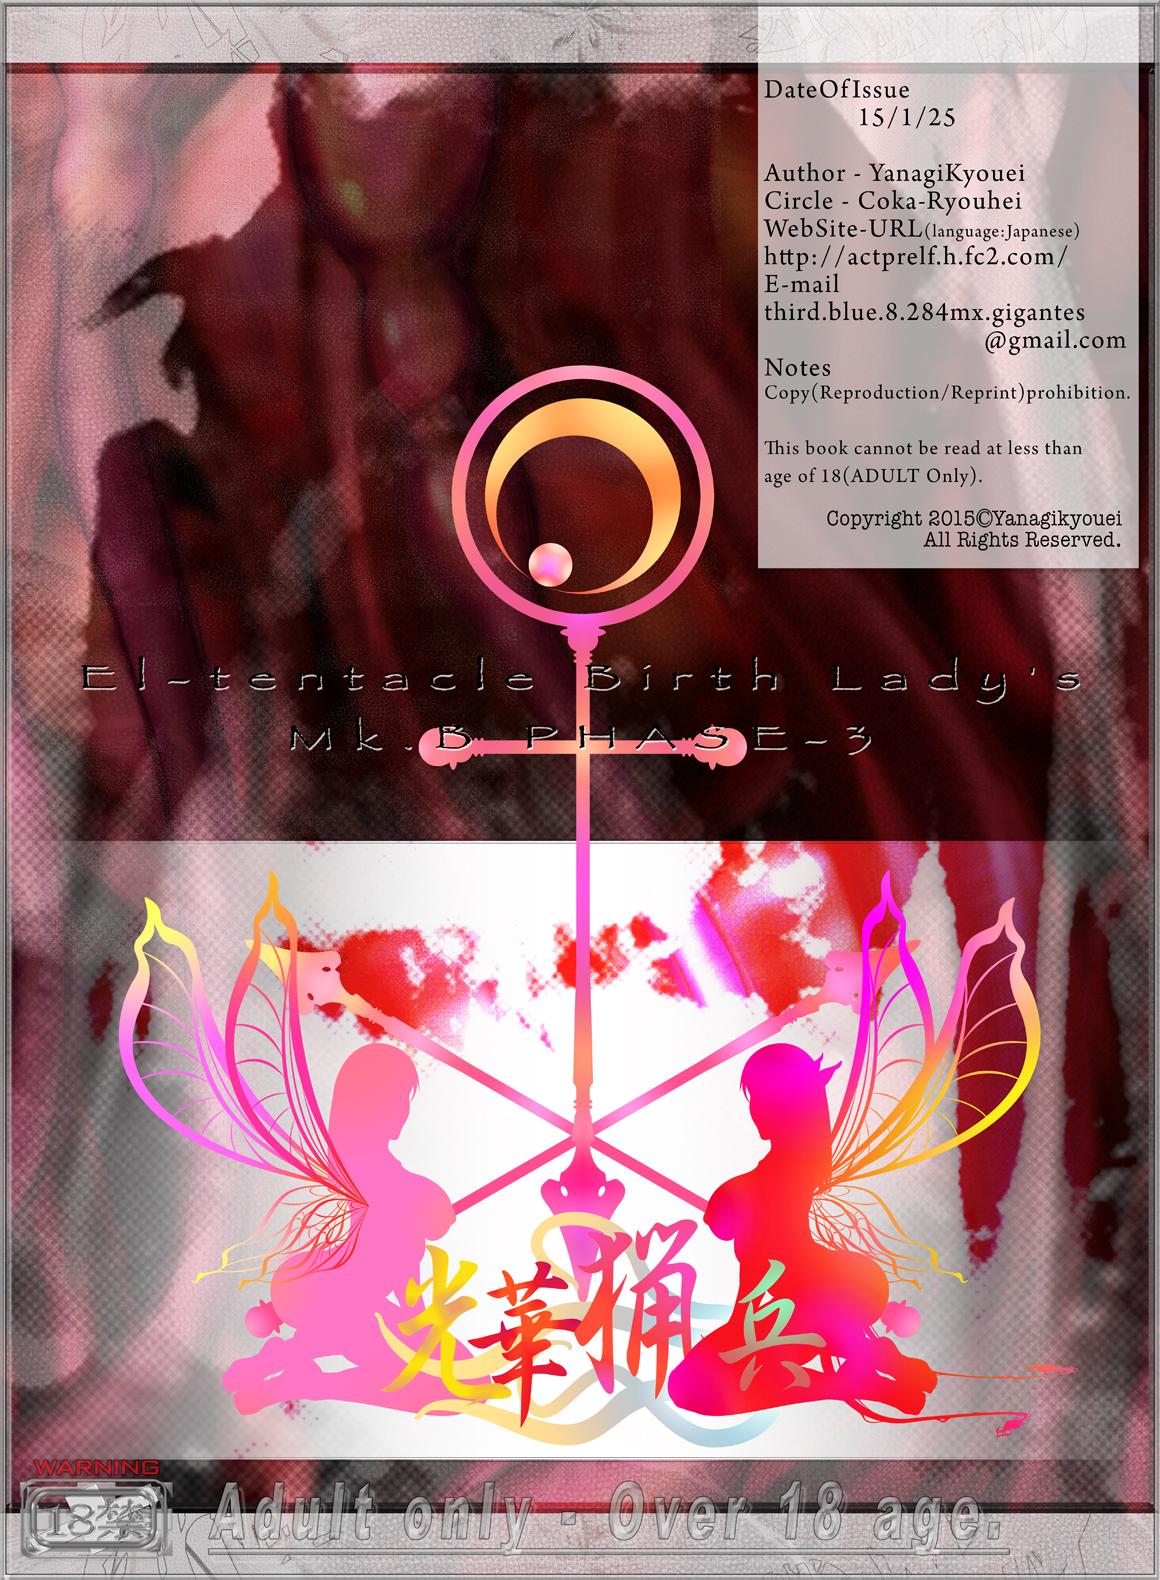 [Kouka Ryouhei (Yanagi Kyouei)] El-tentacle Birth Lady’s Mk.B PHASE-3 "Zen" [Digital] 37